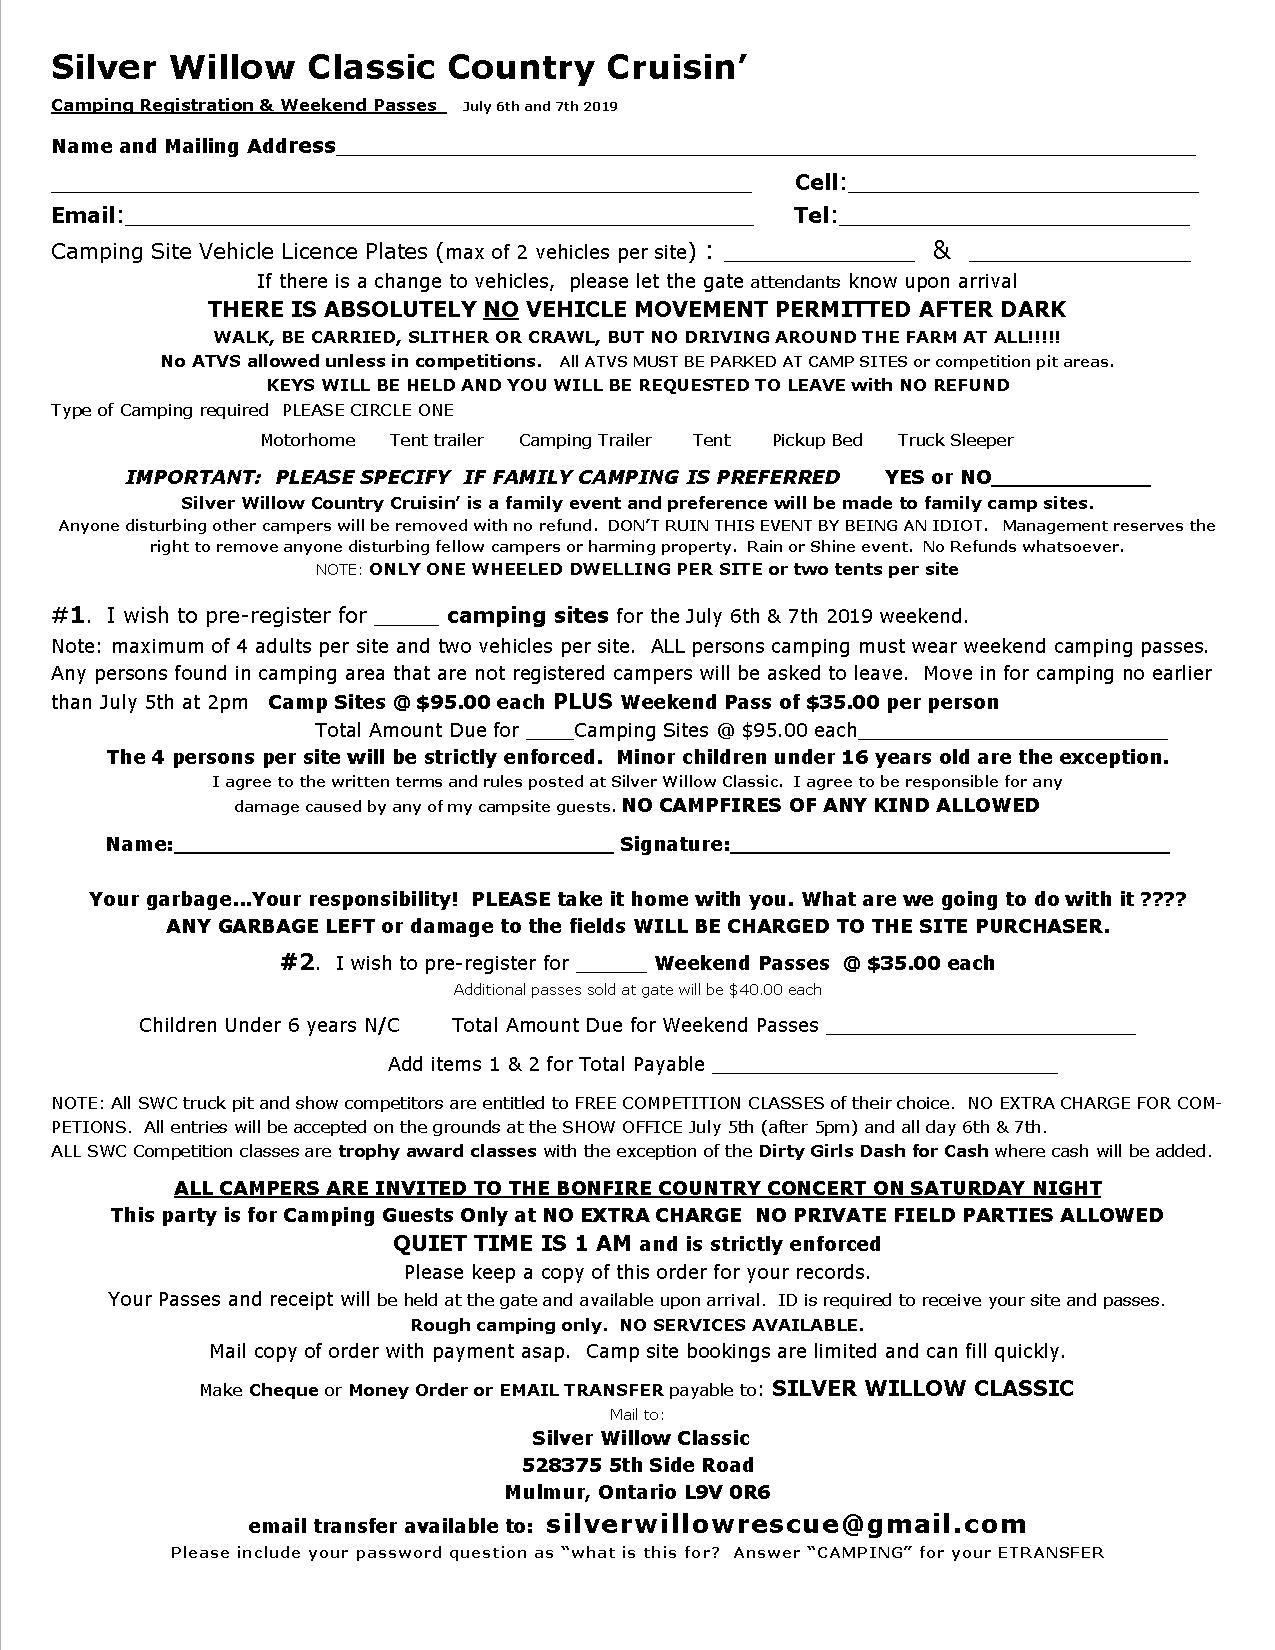 SWC Registration Form